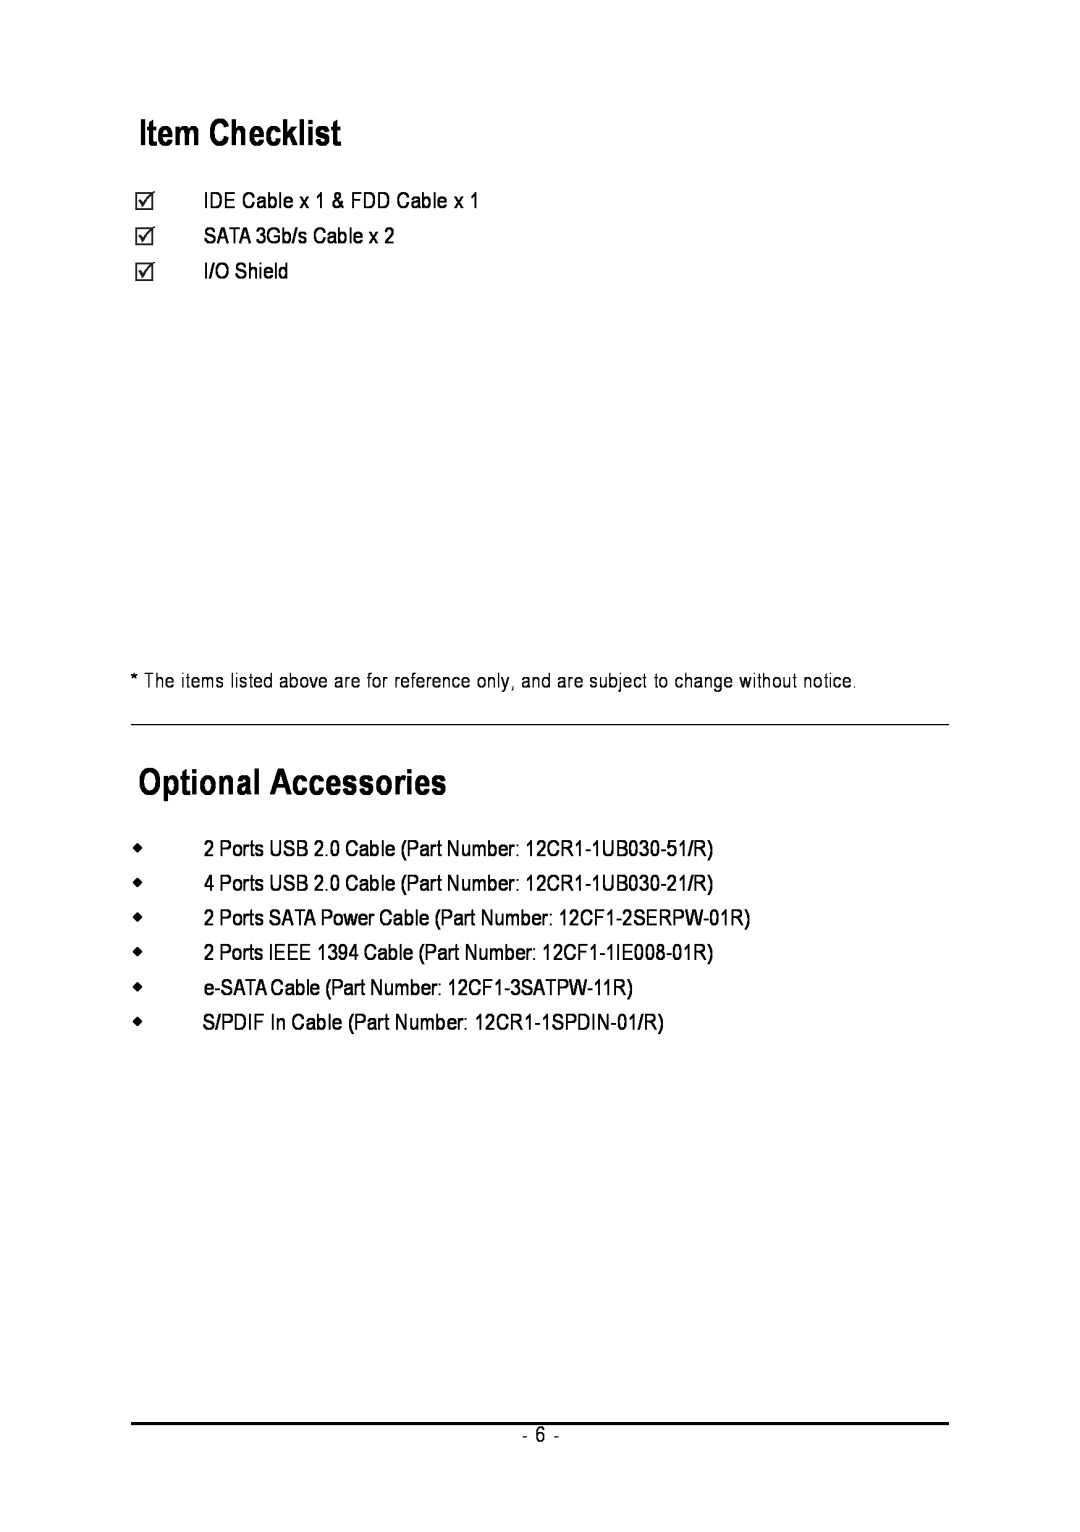 Gigabyte GA-M55S-S3 user manual Item Checklist, Optional Accessories 